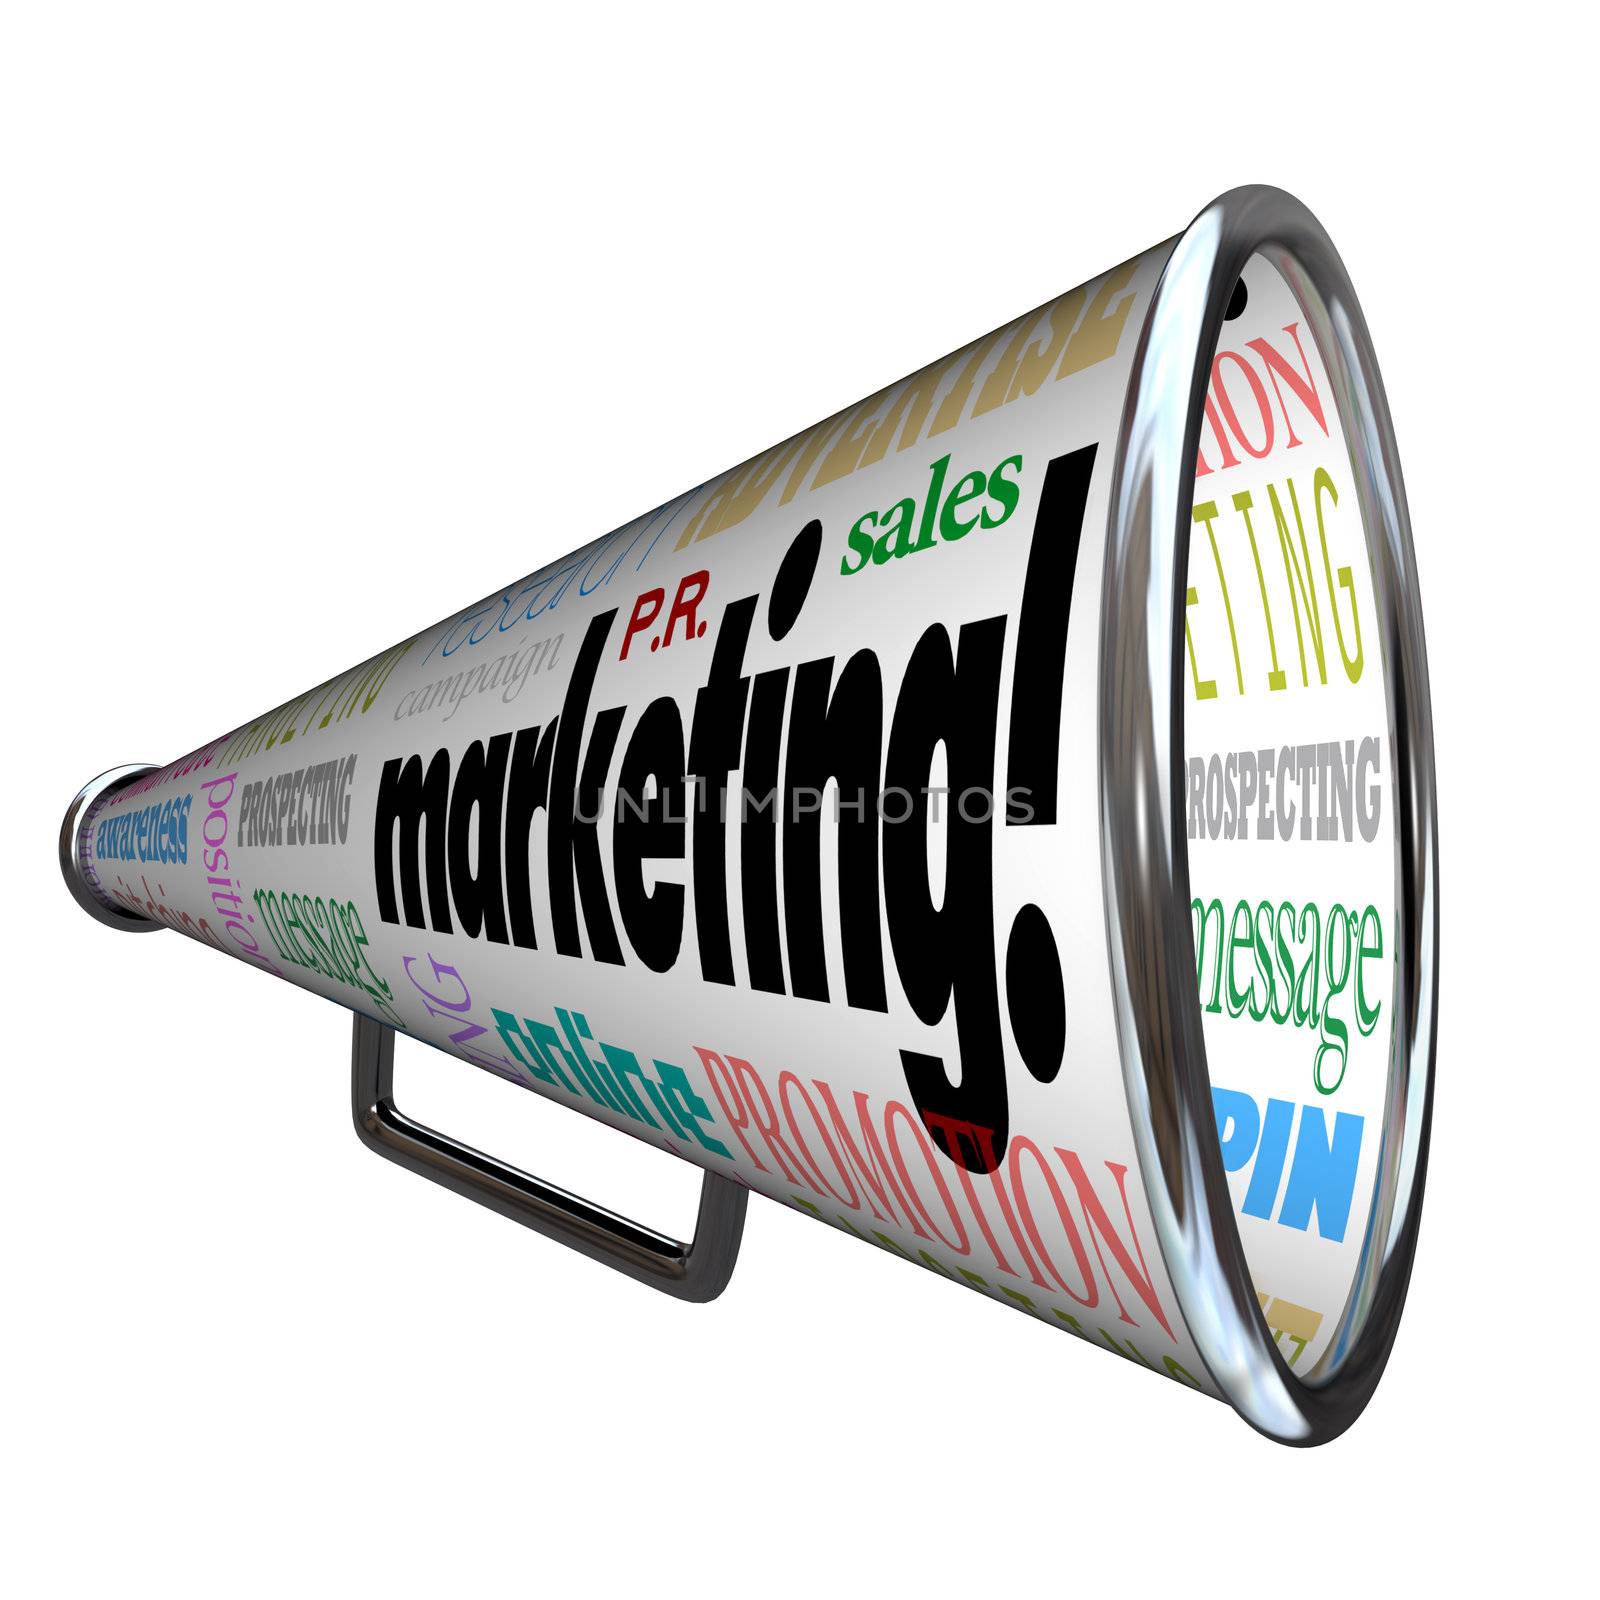 Marketing Bullhorn Megaphone Advertising Sales Message by iQoncept